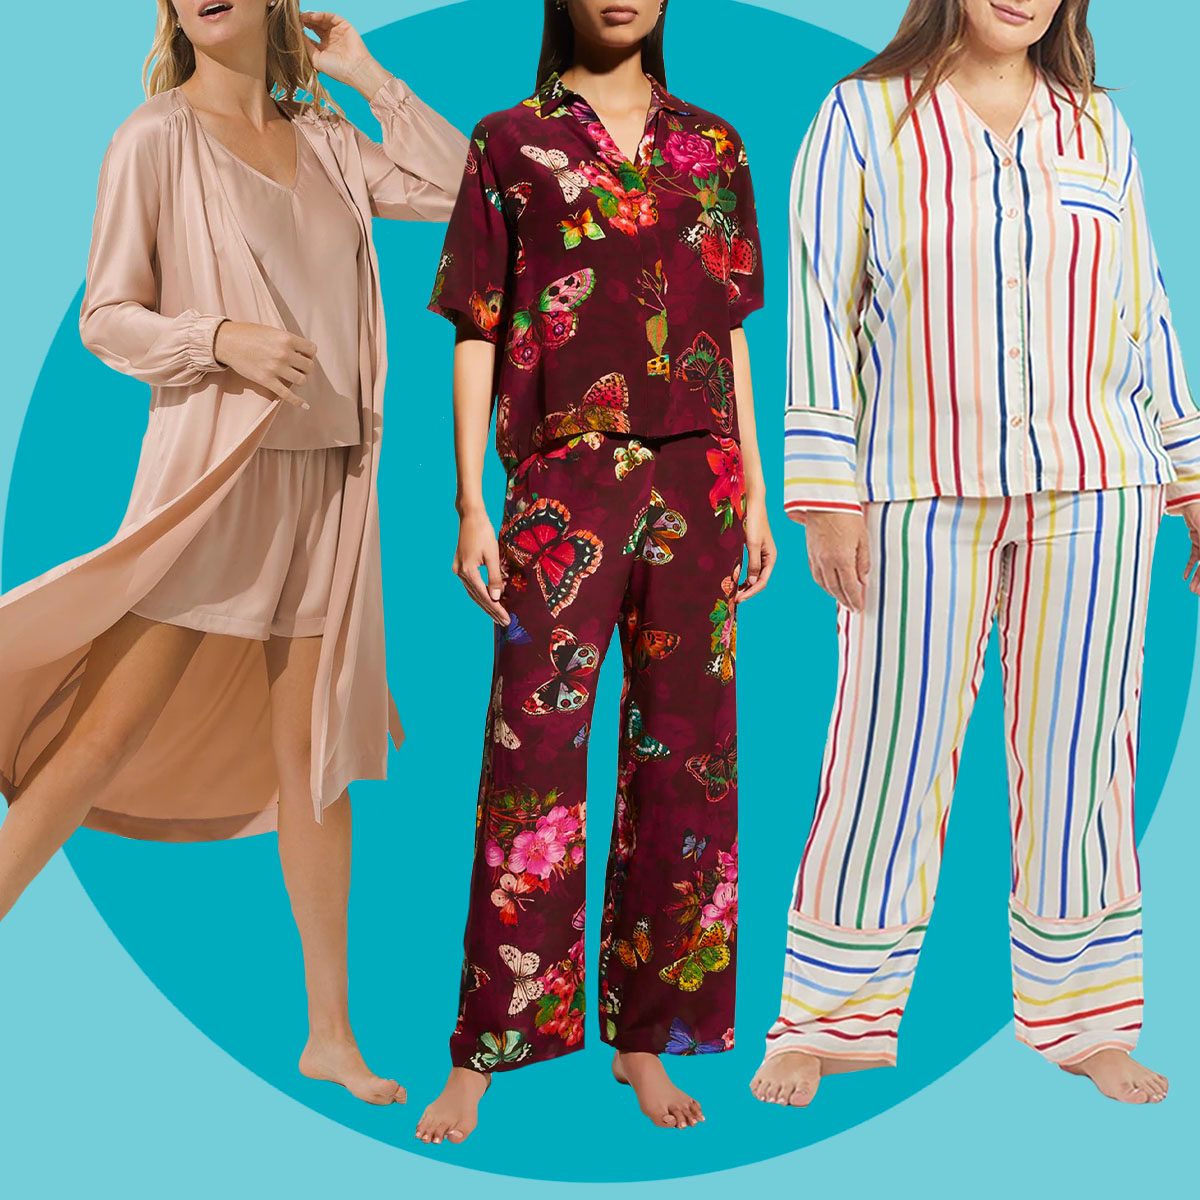 3 Easy Ways to Style The Silky Pajamas Trend 